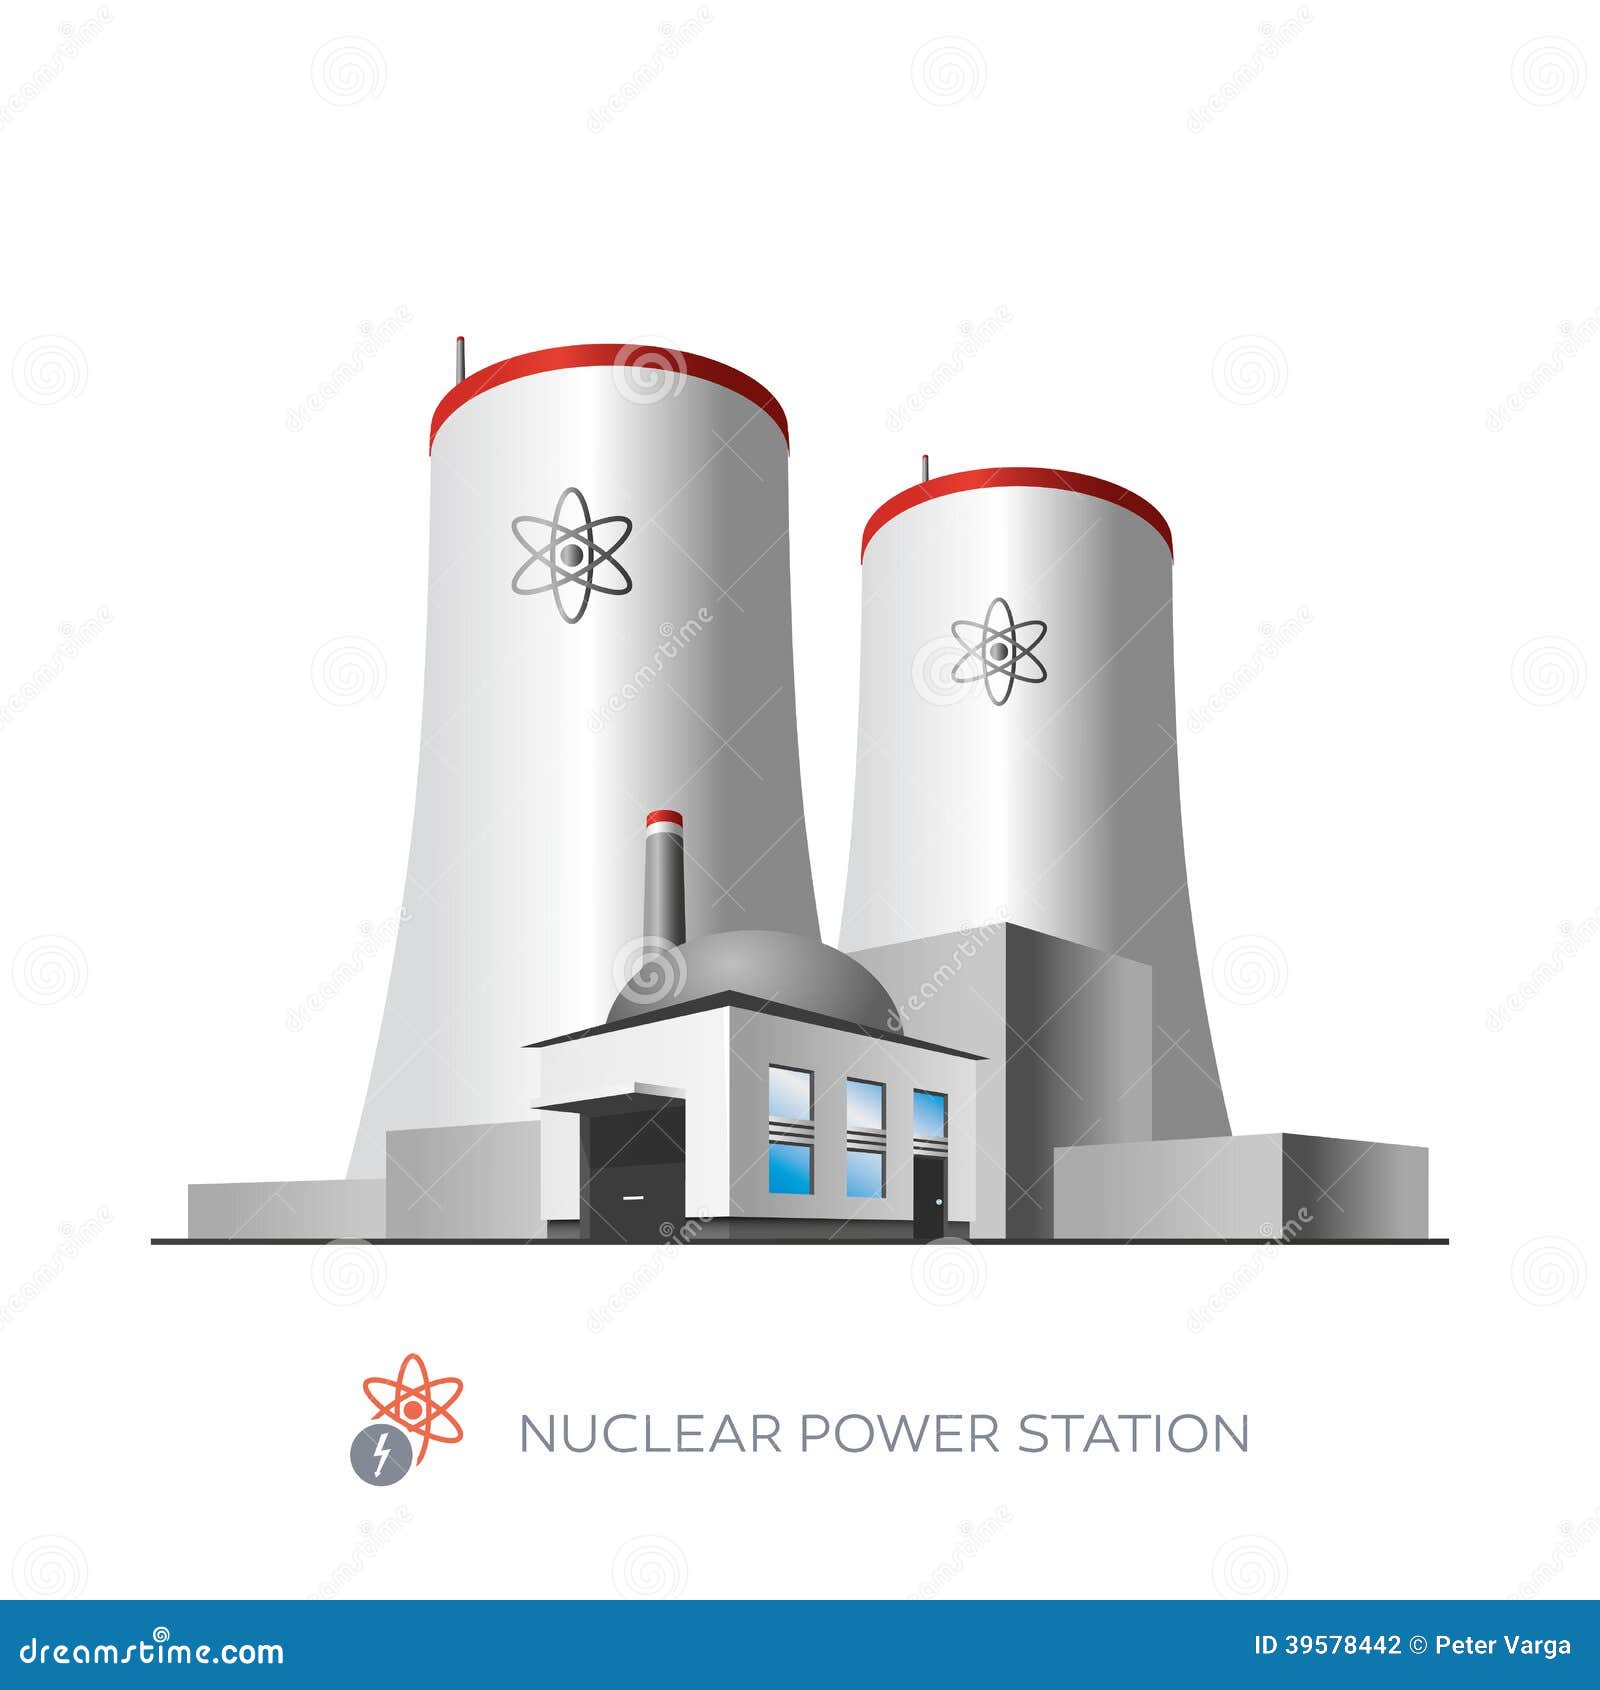 nuclear power plant clipart - photo #22